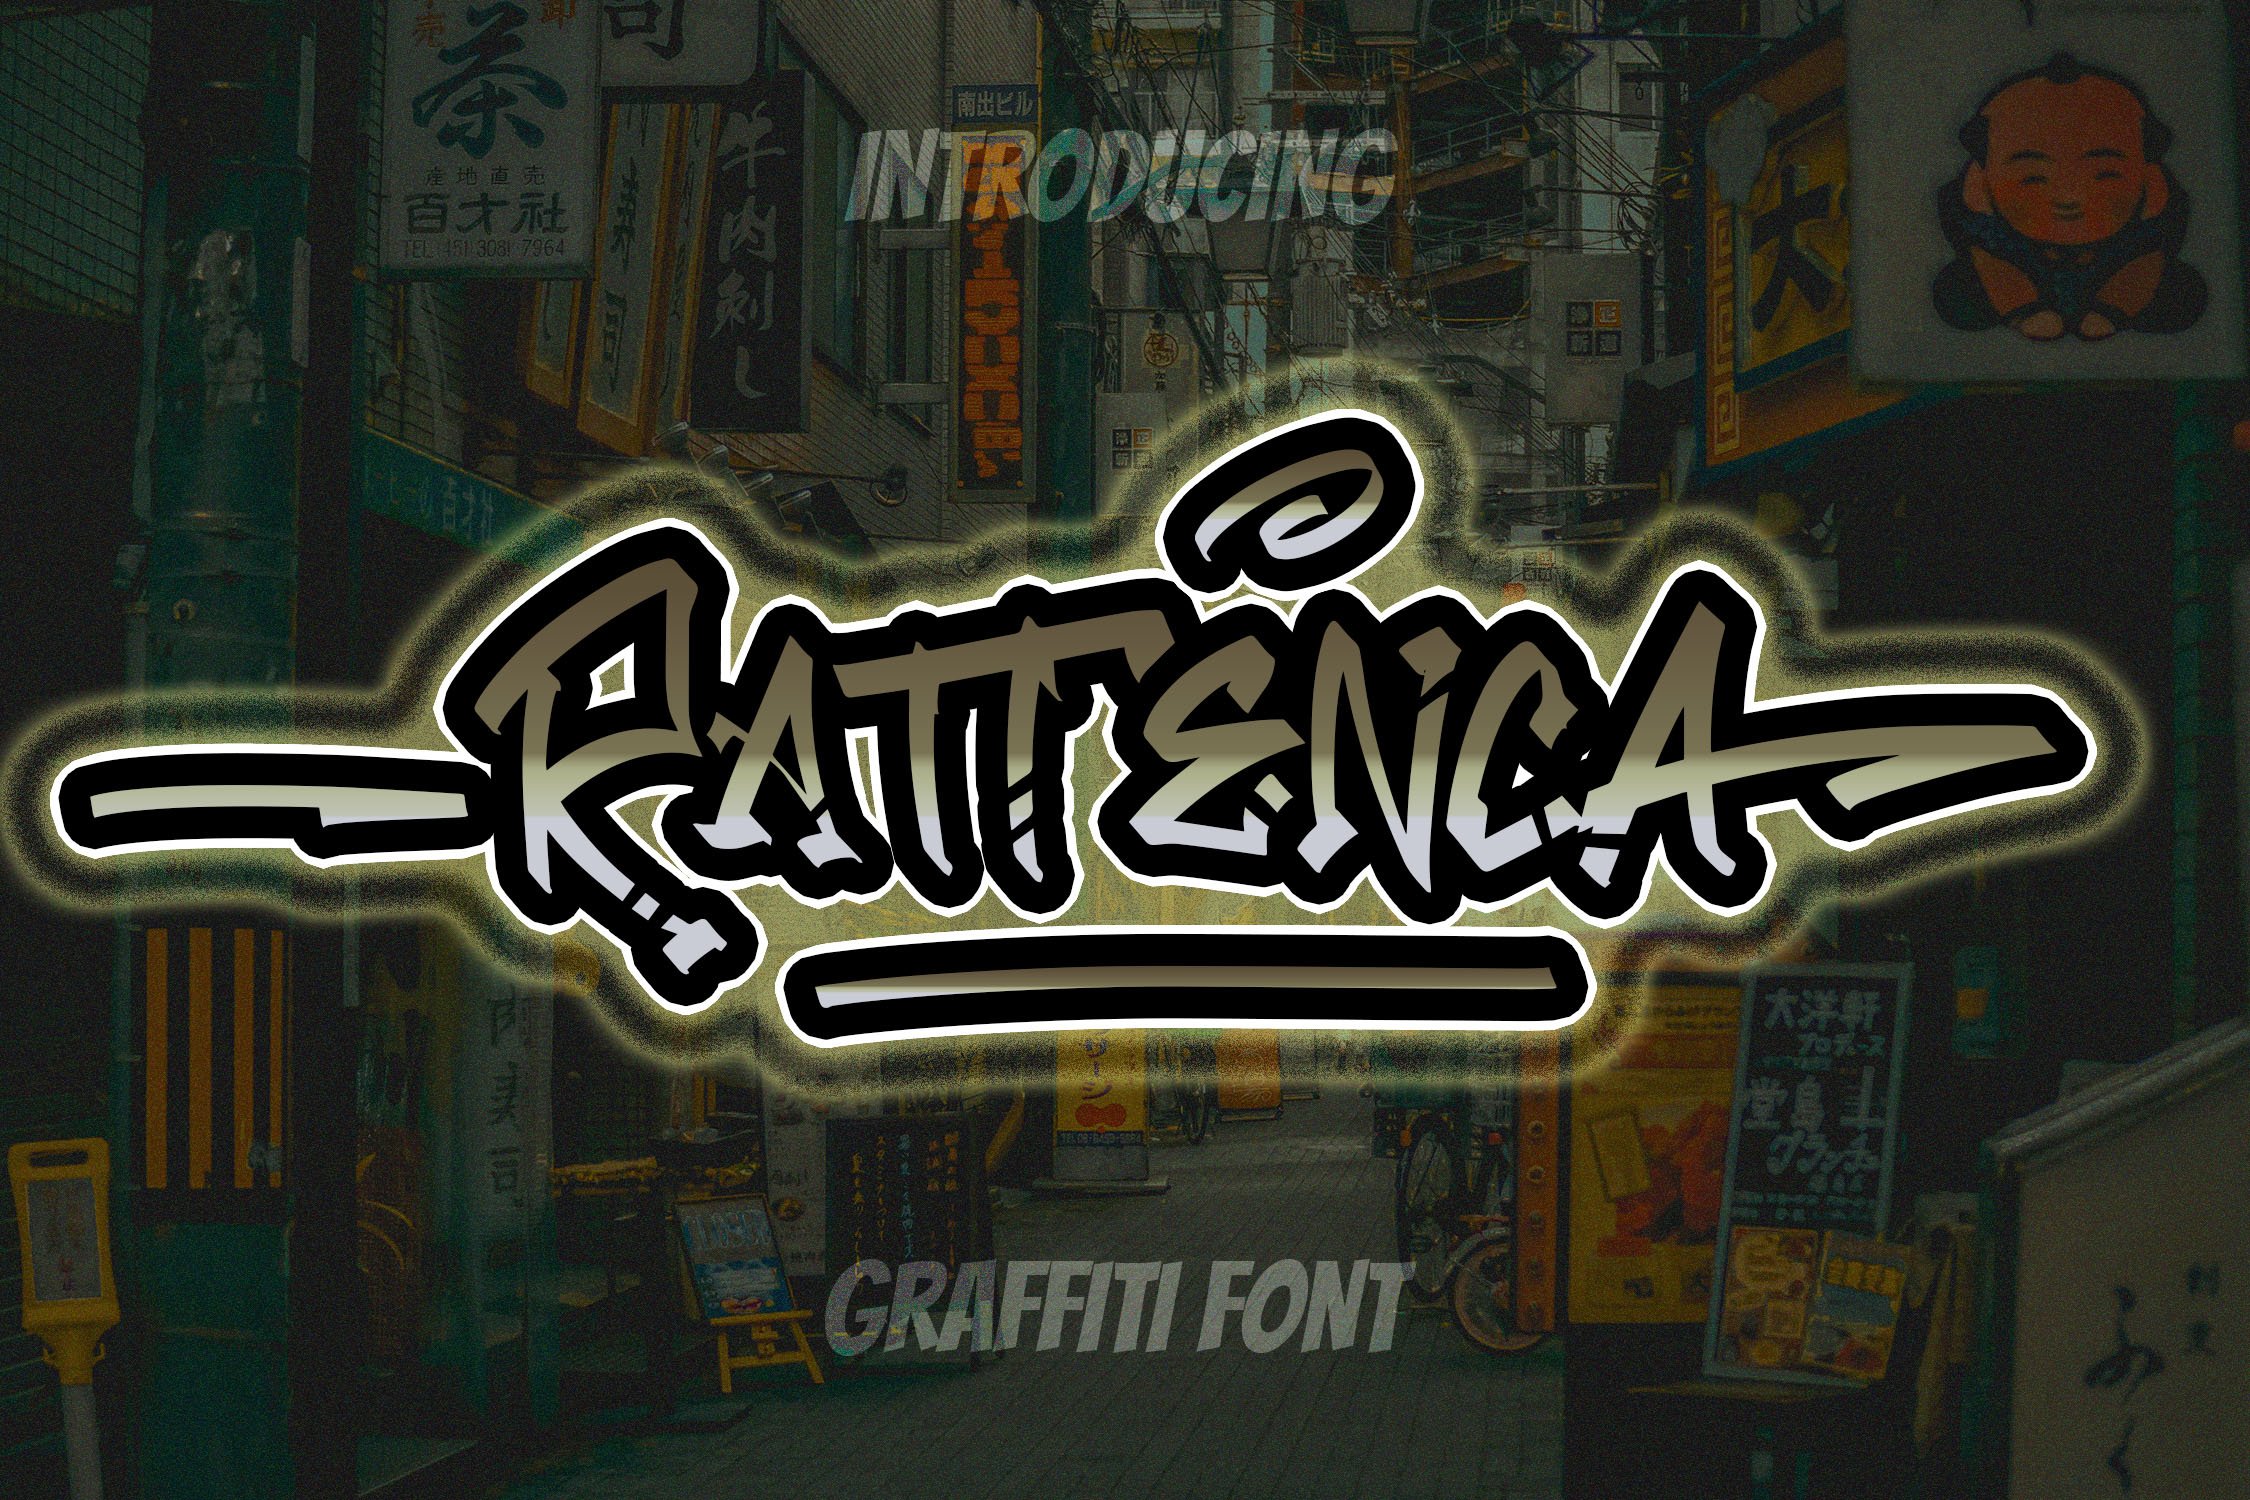 Rattenca - Graffiti Font cover image.